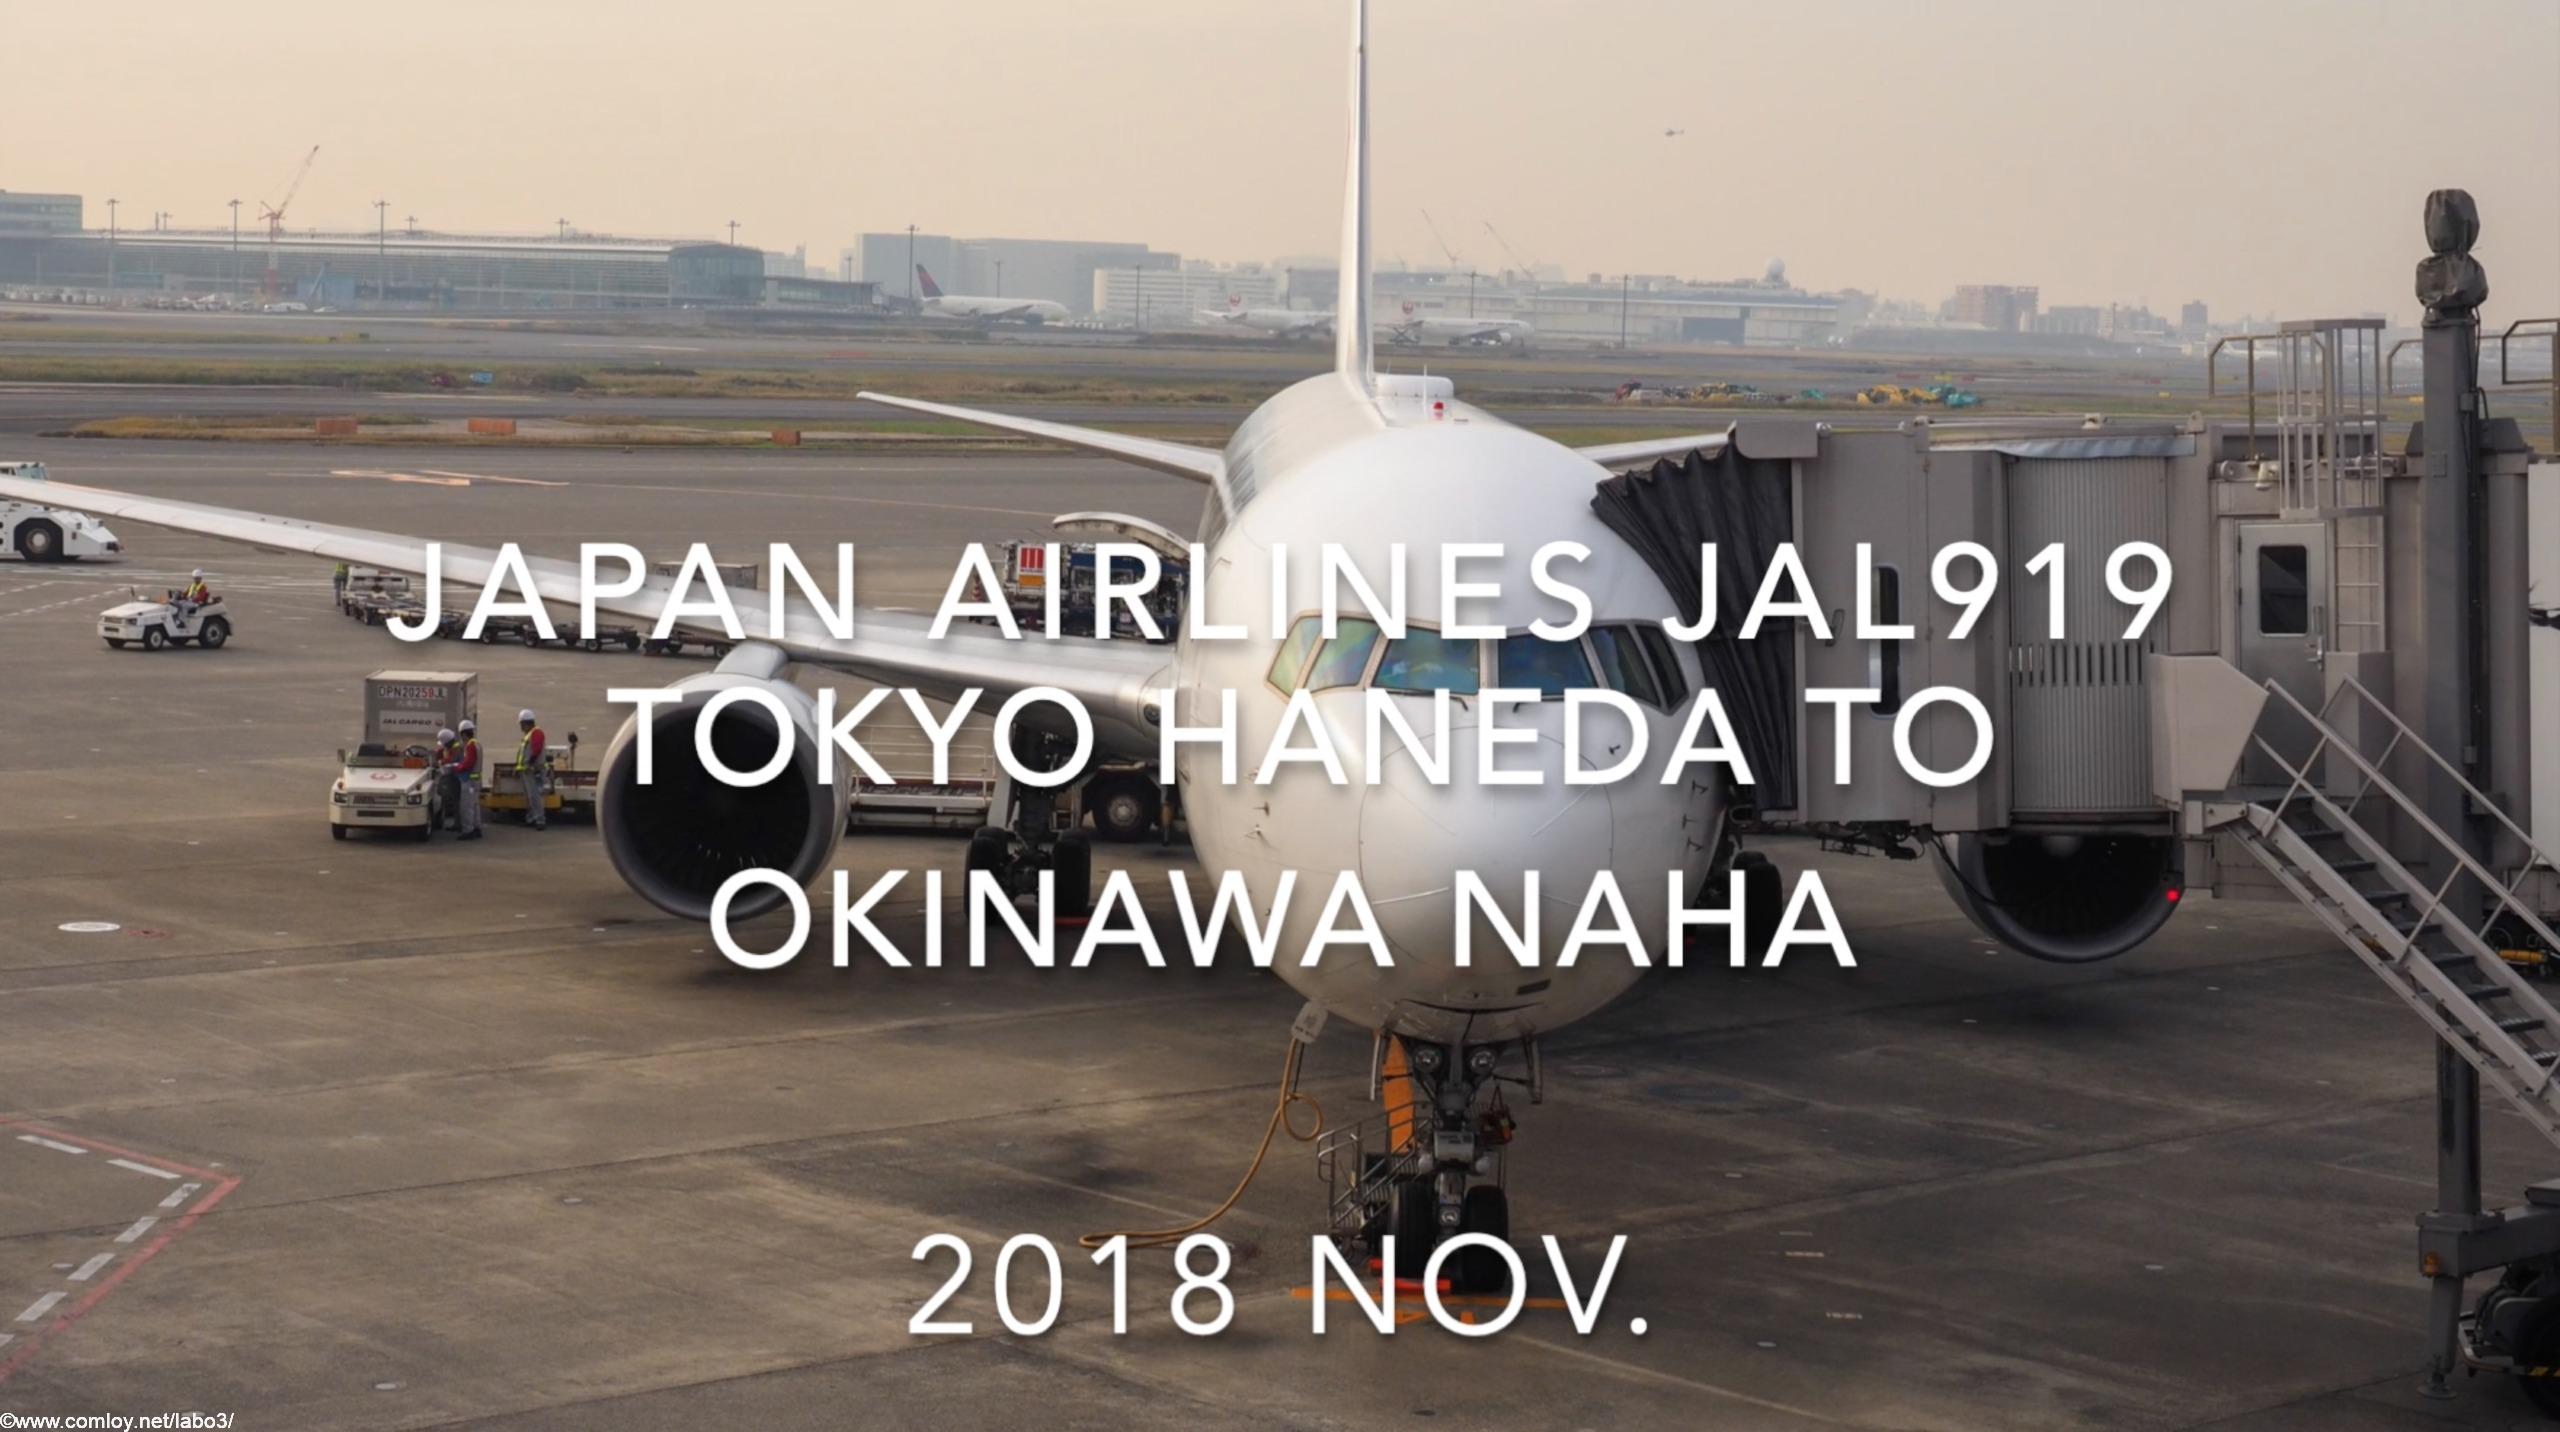 【Flight Report】Japan Airlines JAL919 TOKYO HANEDA to OKINAWA NAHA 2018 NOV 日本航空 羽田 - 那覇 搭乗記